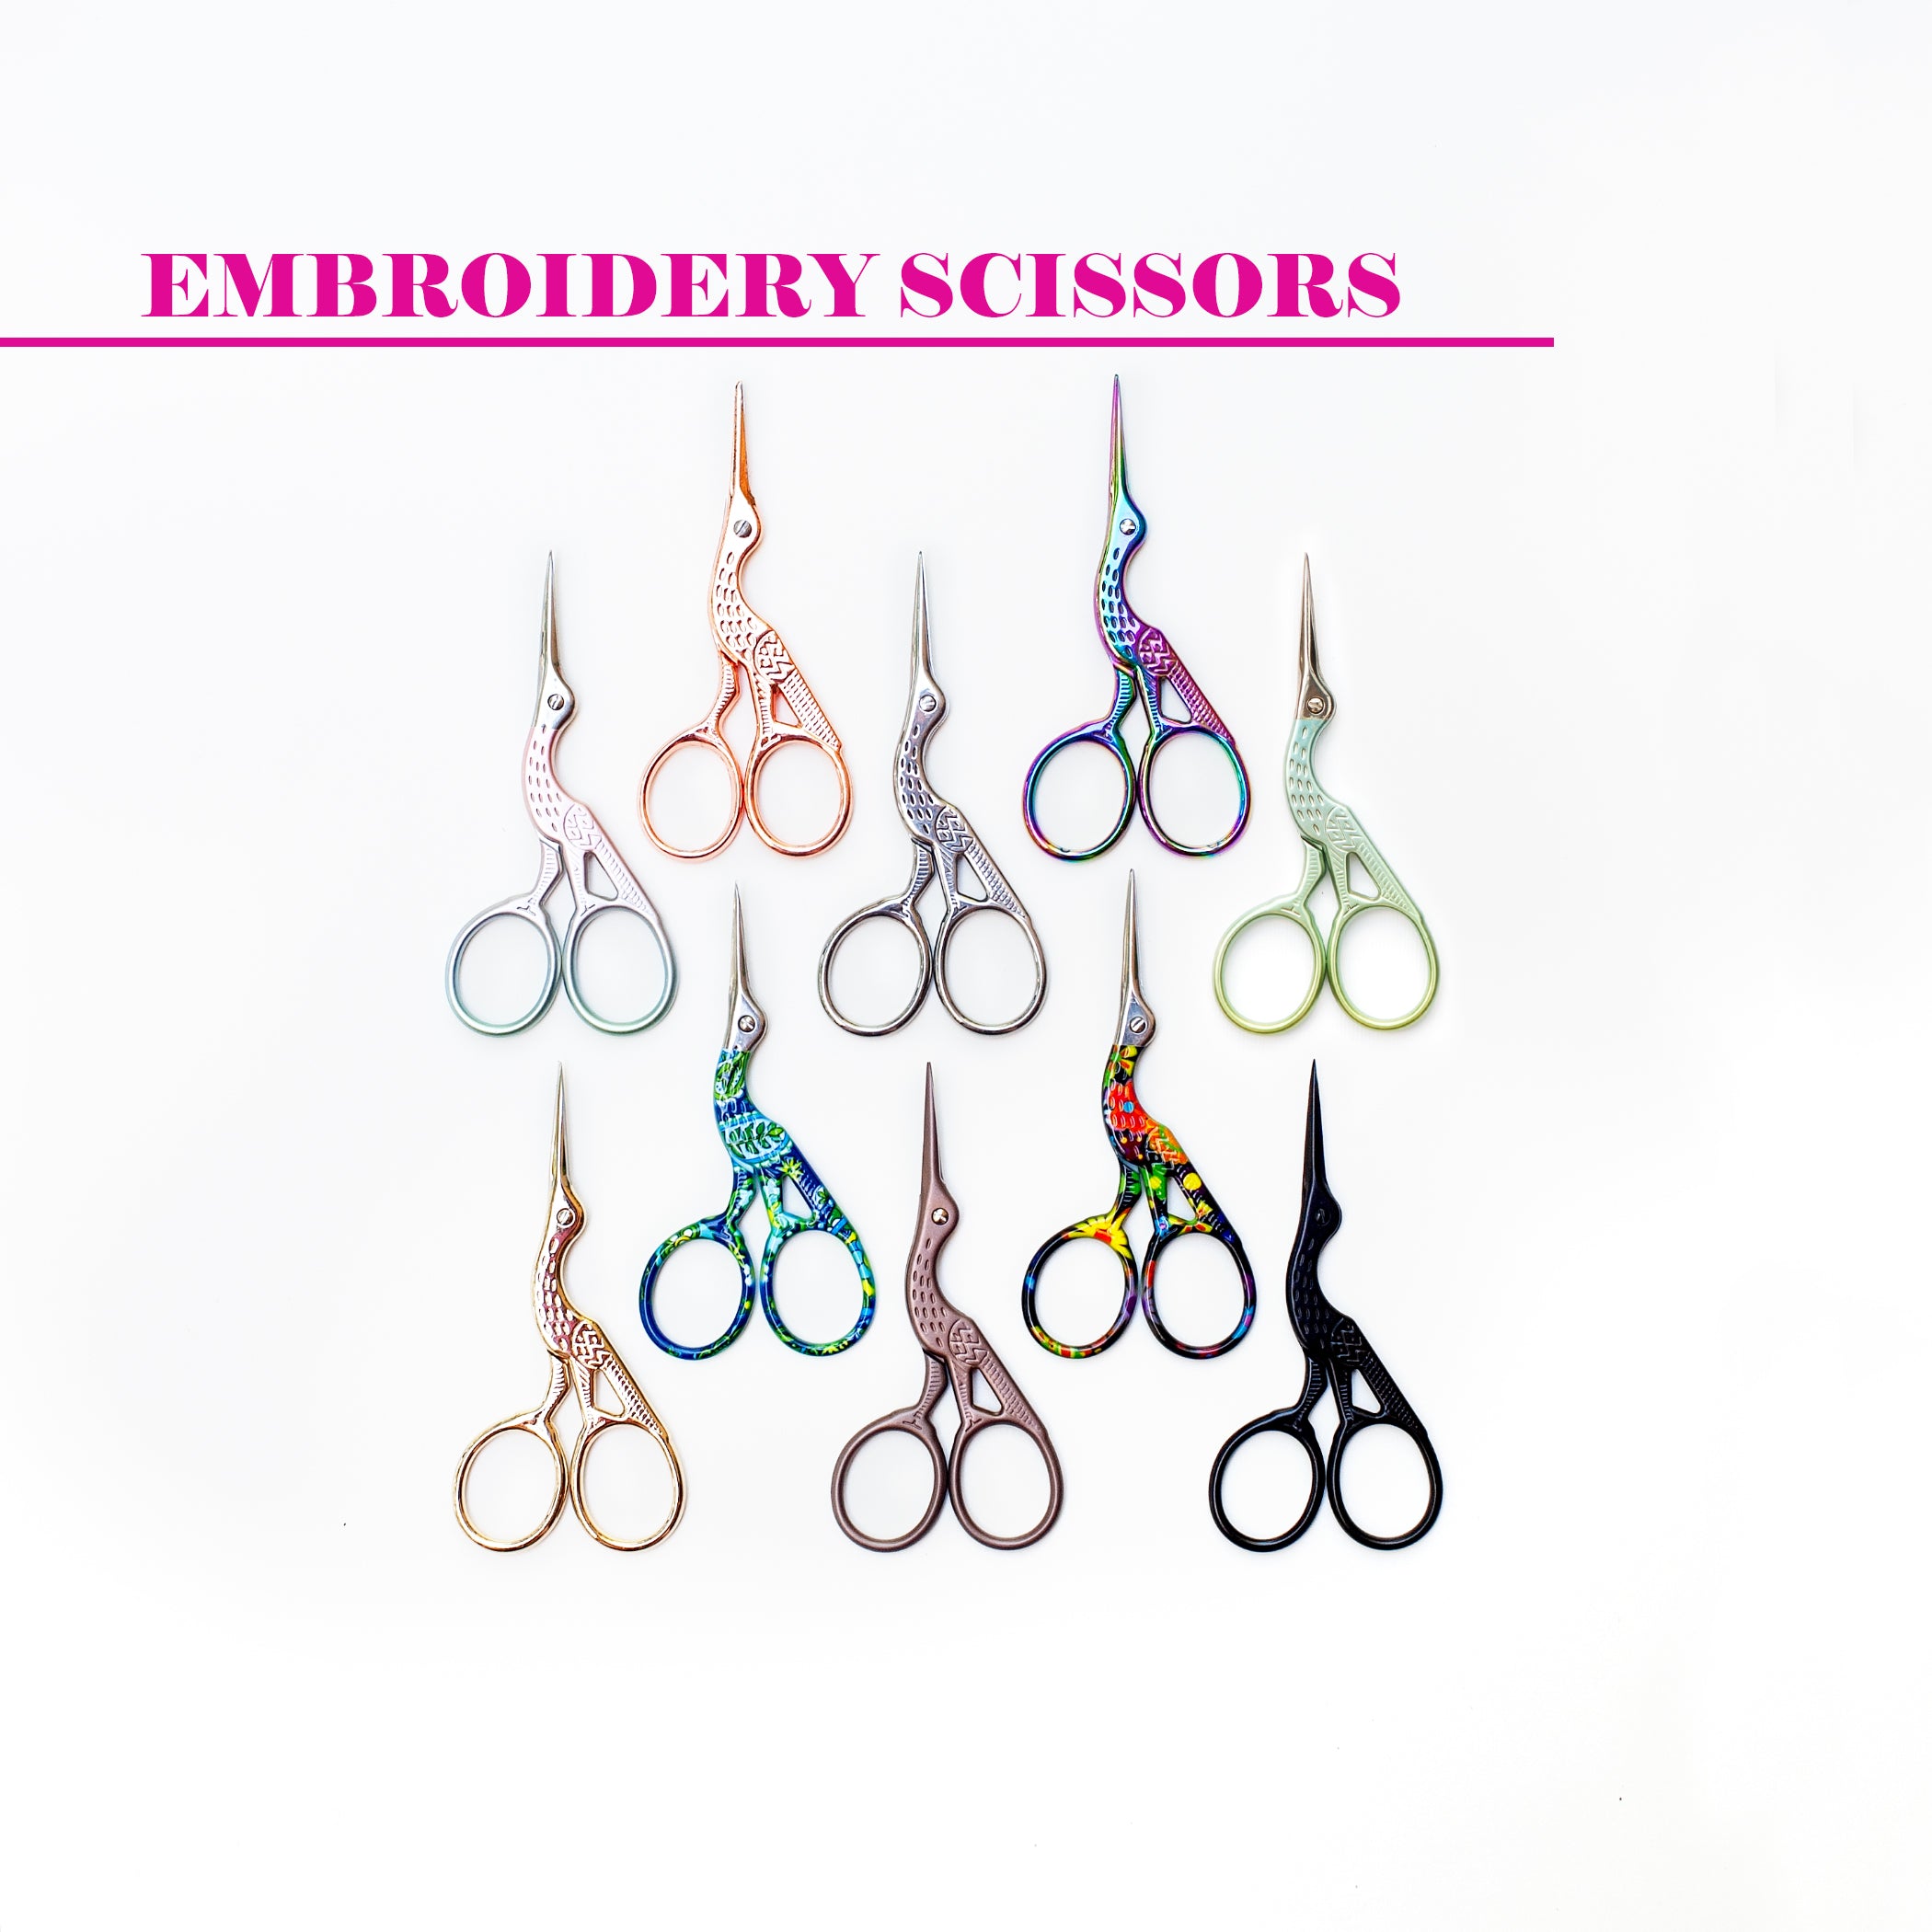 Stork Scissors, Cutting Scissors, Trimming Scissors, Shear Scissors,  Embroidery Scissors, Sewing Scissors, Craft Scissors, Guchet, Yarn 